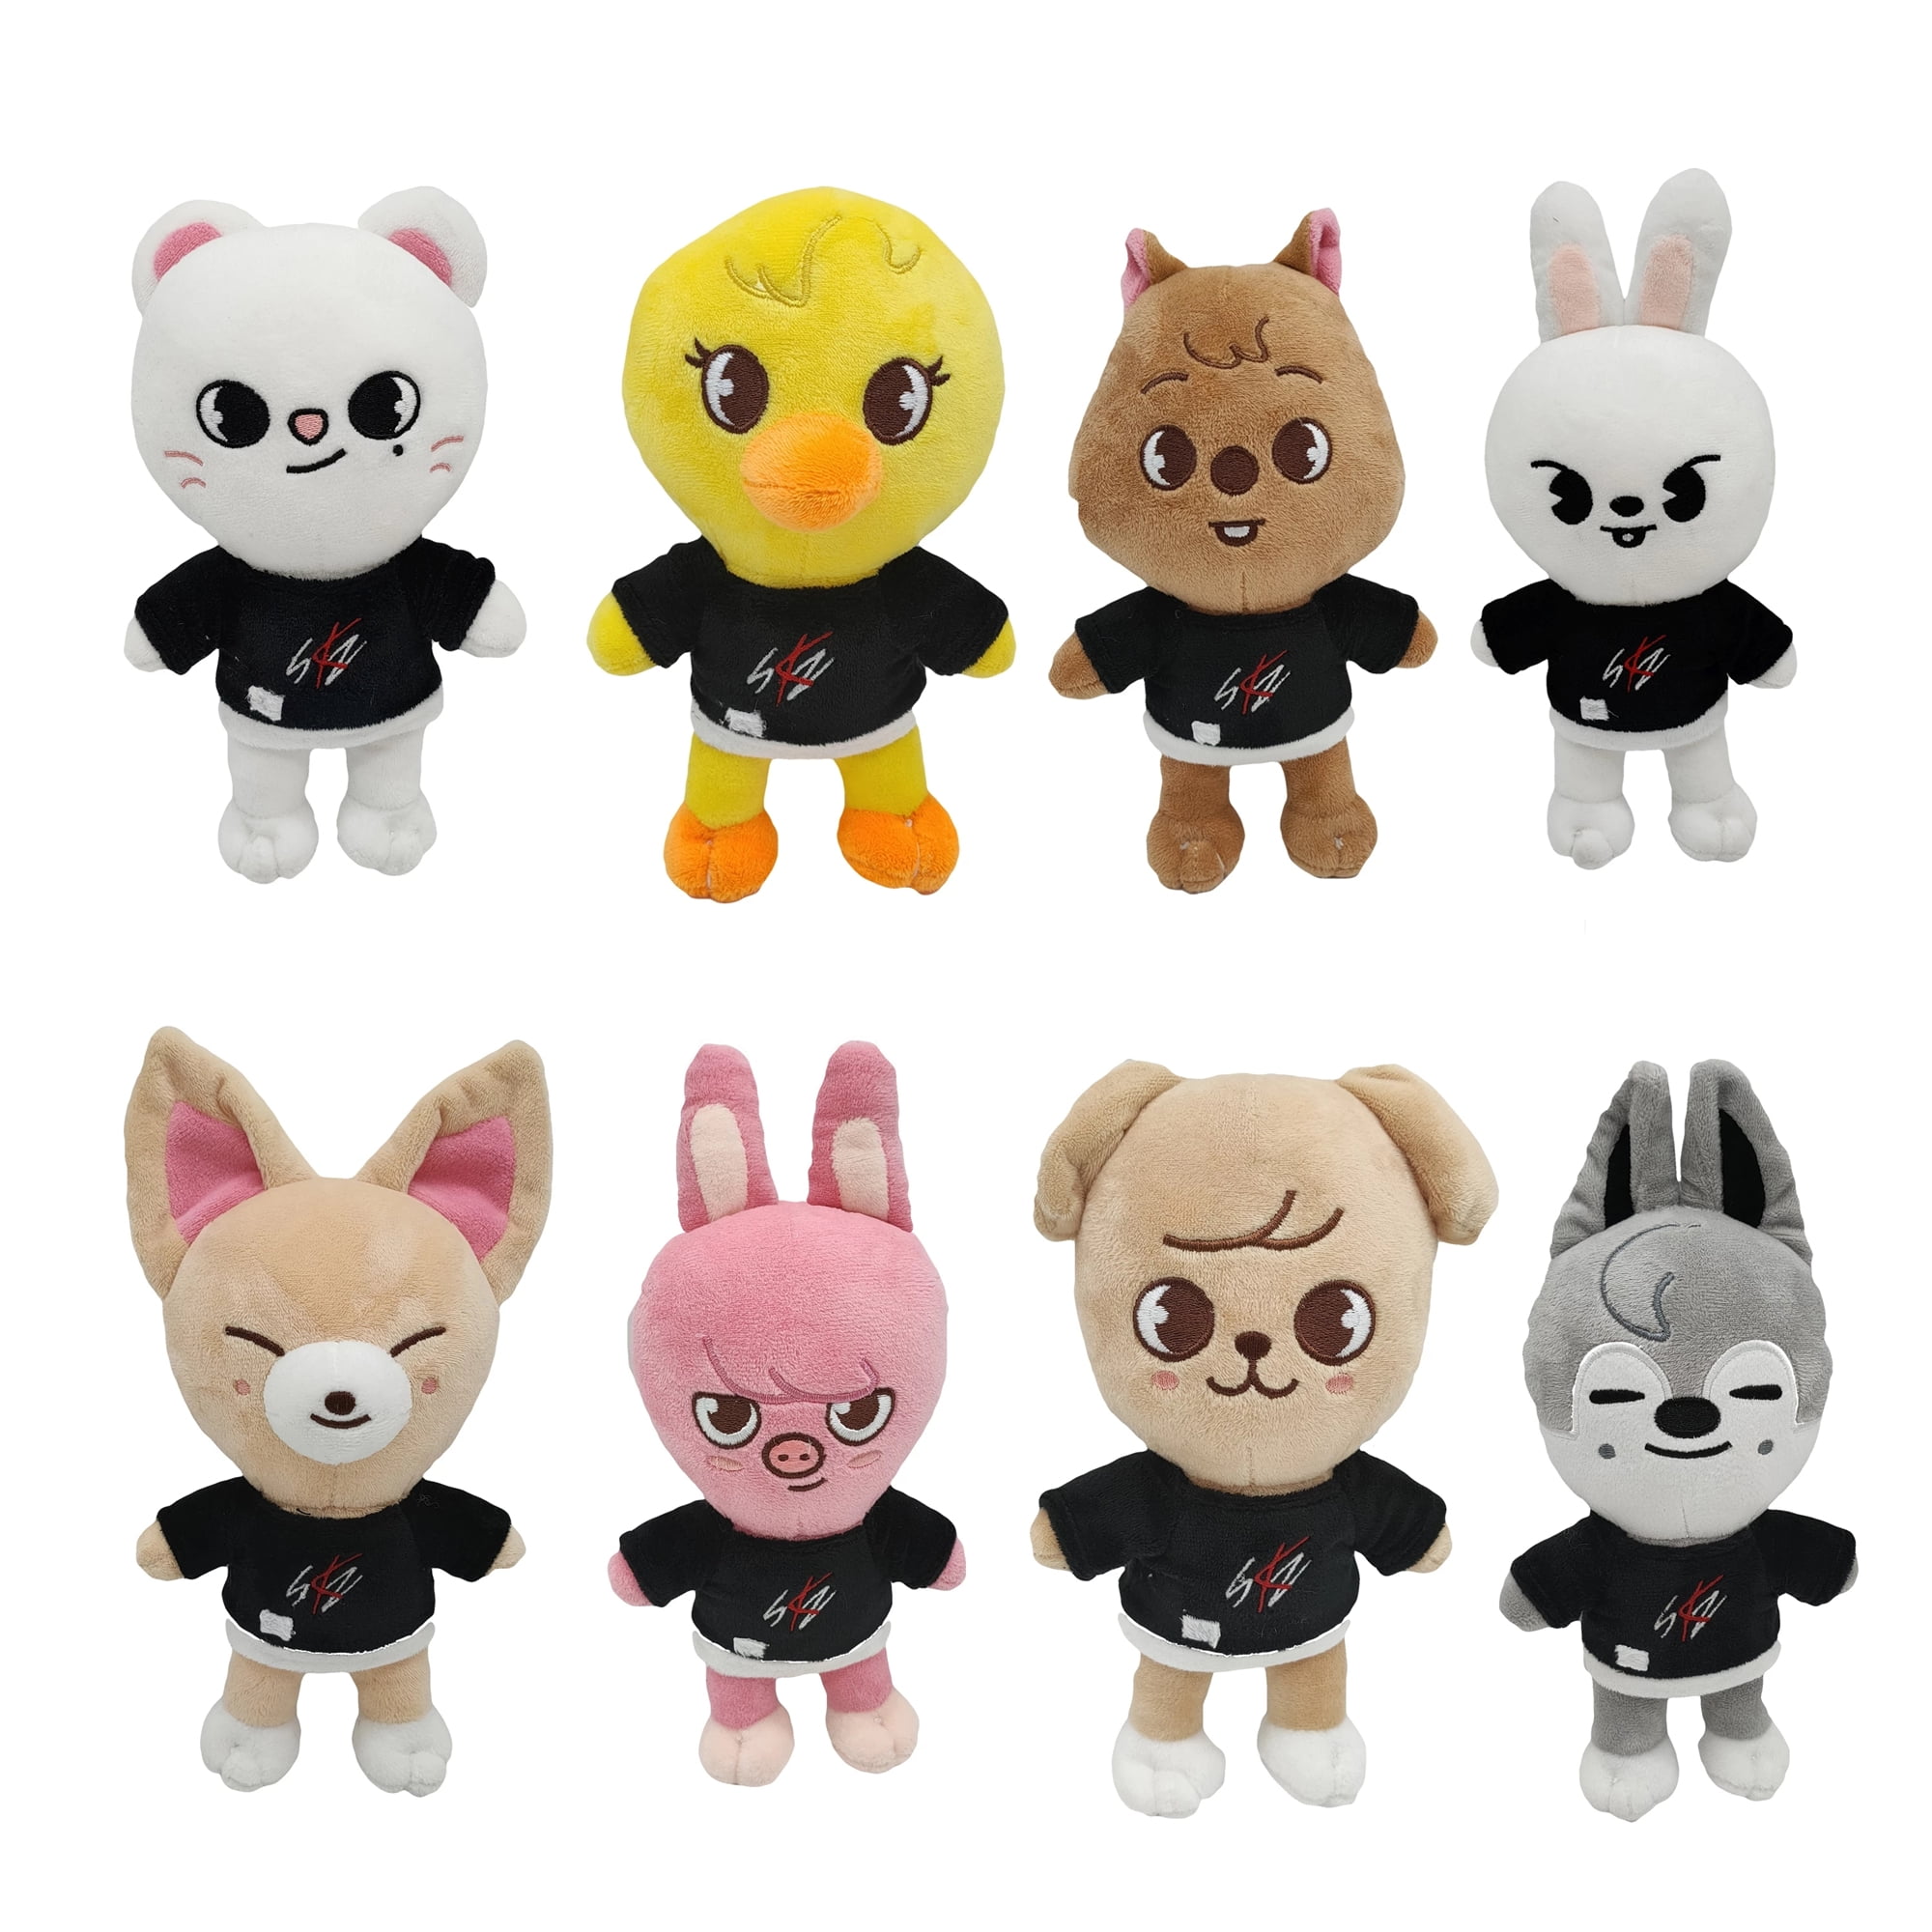 Skzoo Plush Toy,Skz Plushie Stray Kids Plush Dolls for Kids Fans Gifts(1PC)